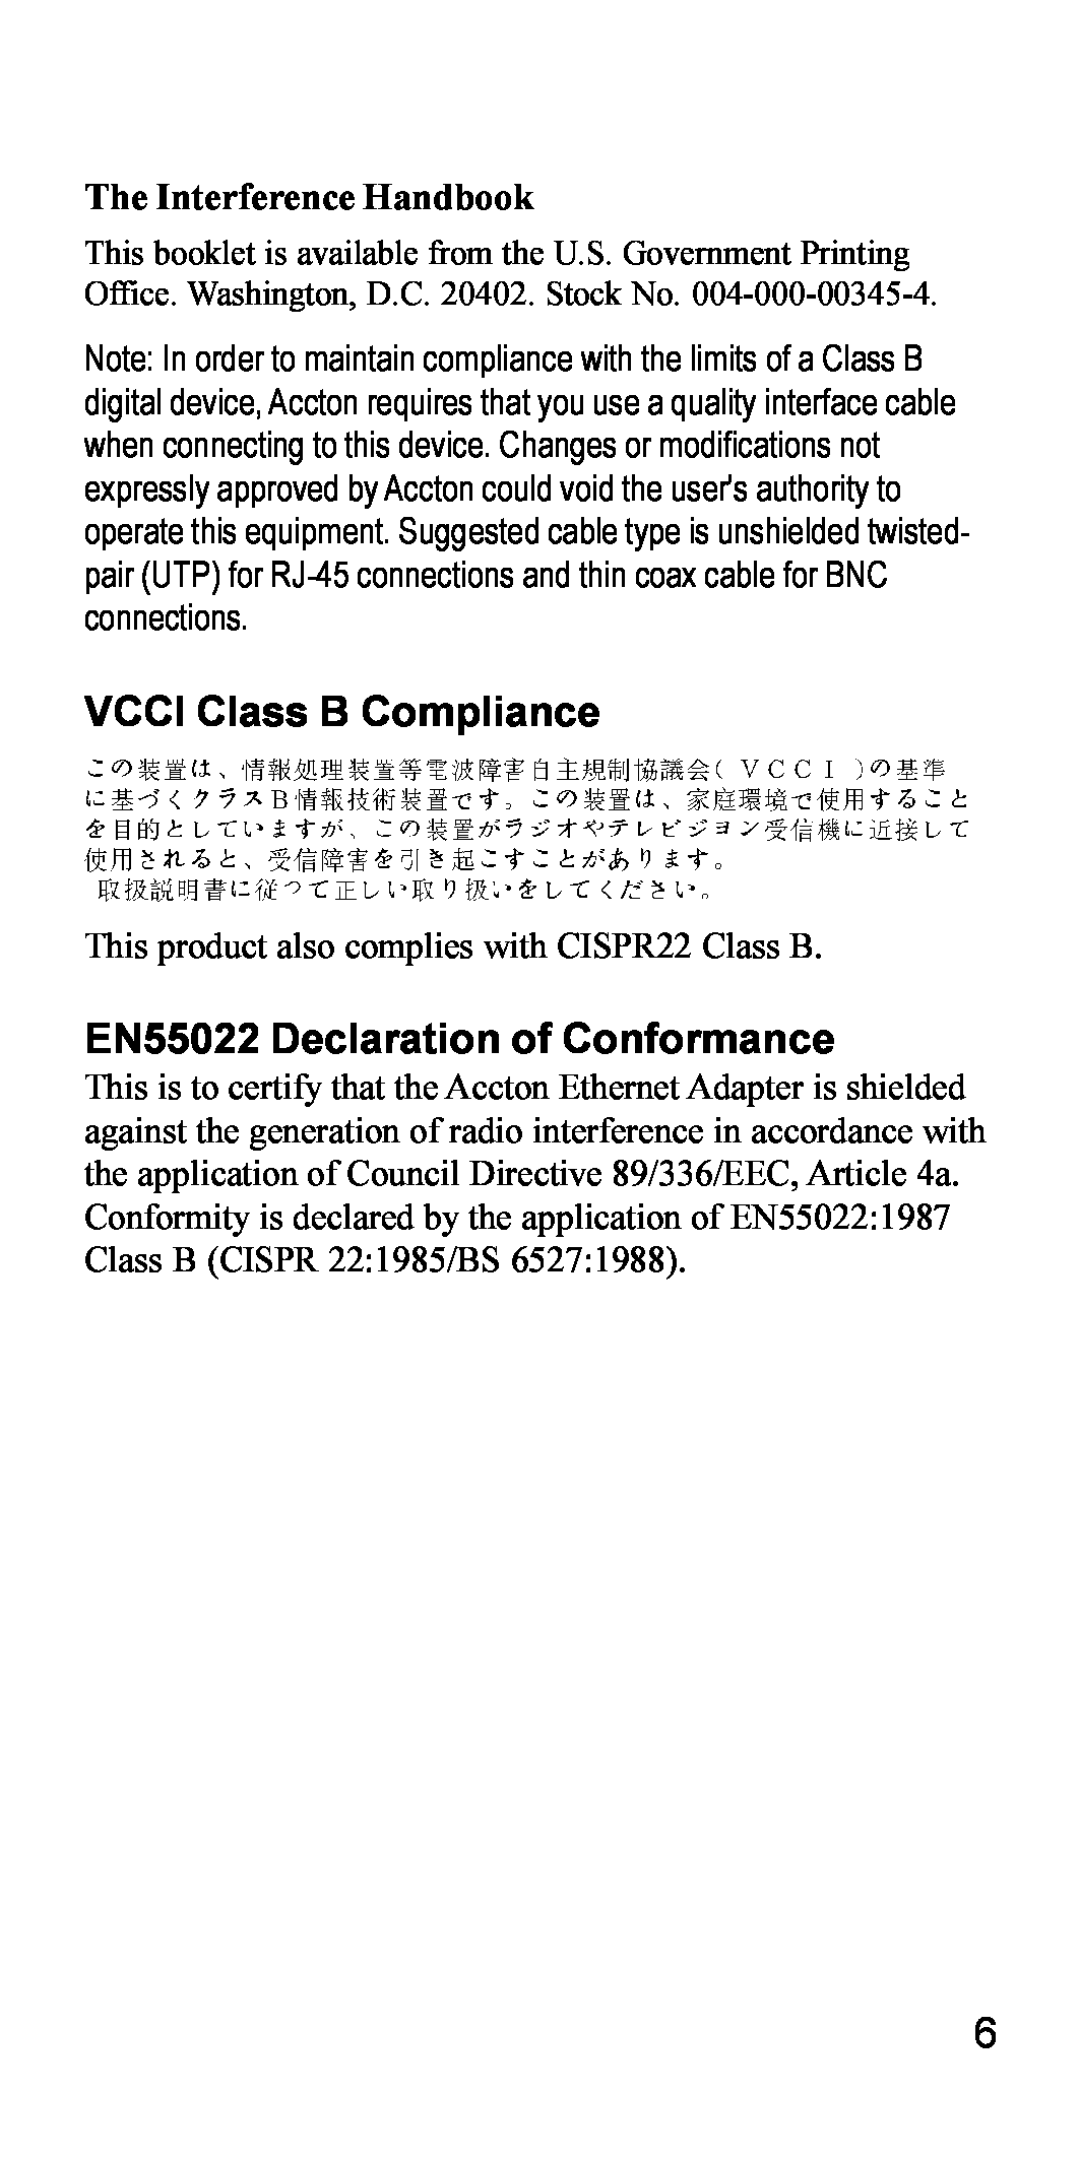 Accton Technology EN2216-2 VCCI Class B Compliance, EN55022 Declaration of Conformance, The Interference Handbook 